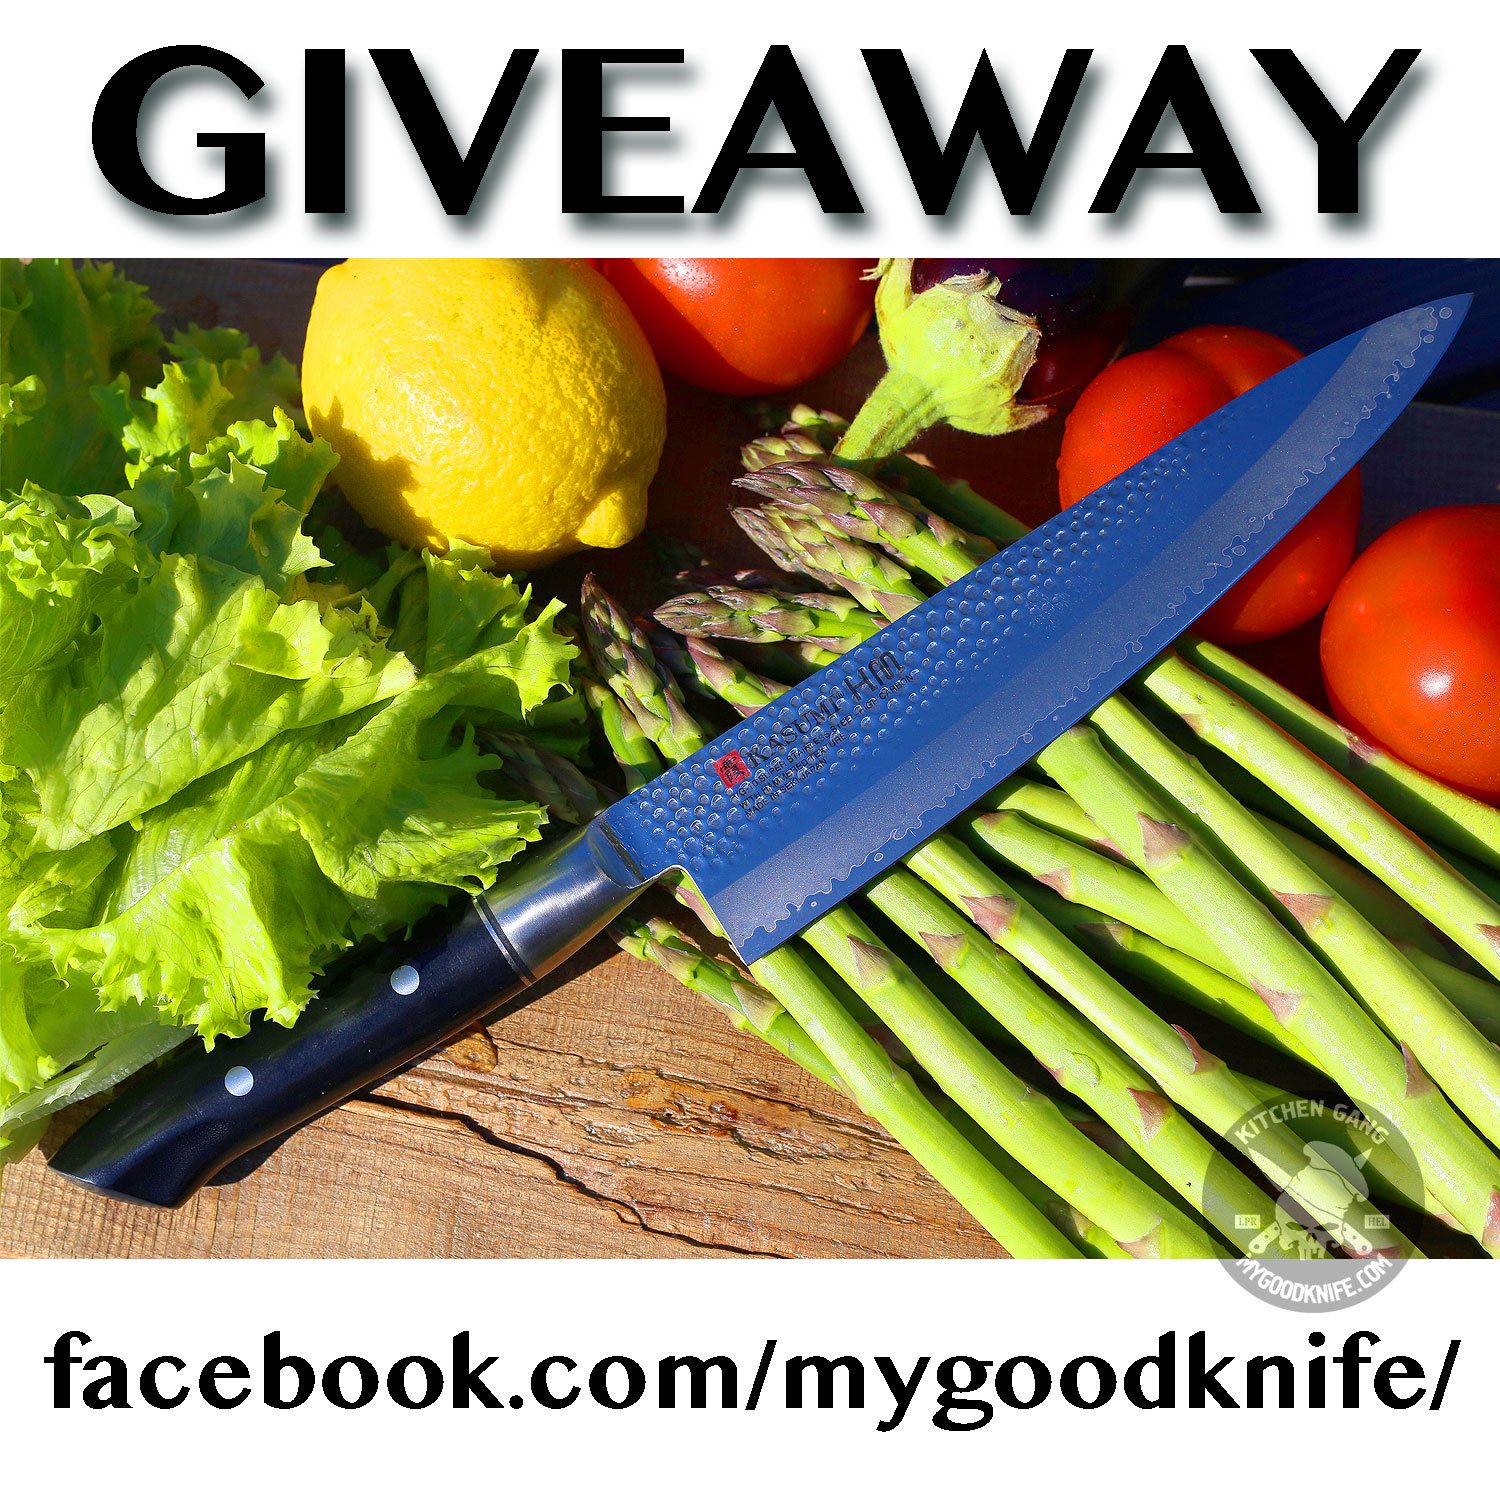 Giveaway! Kasumi HM Chef knife!